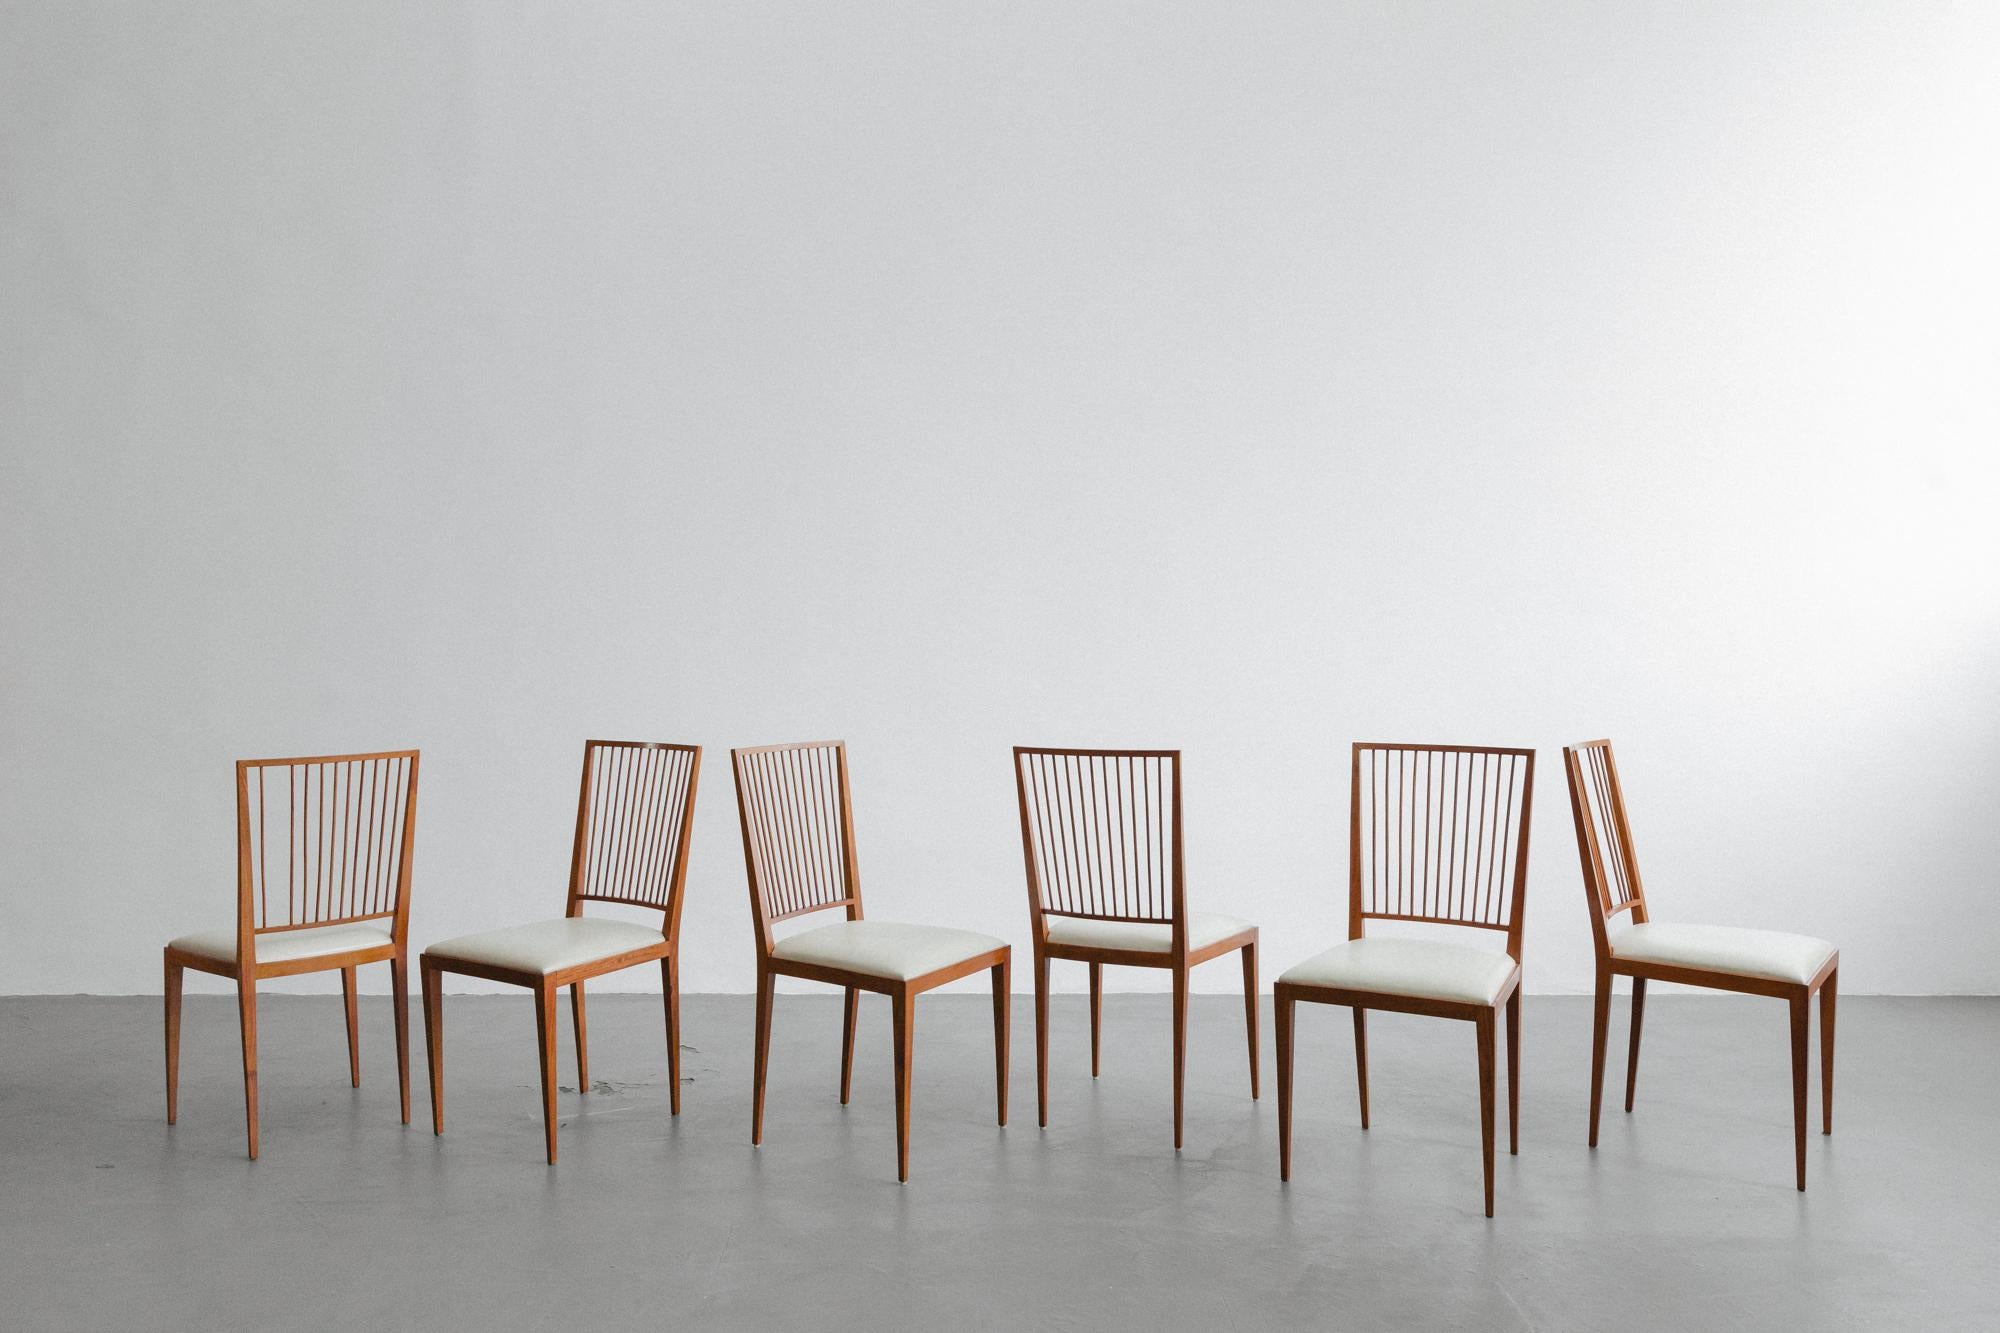 Brazilian Set of 6 Chairs by Joaquim Tenreiro, 1947, Midcentury Design For Sale